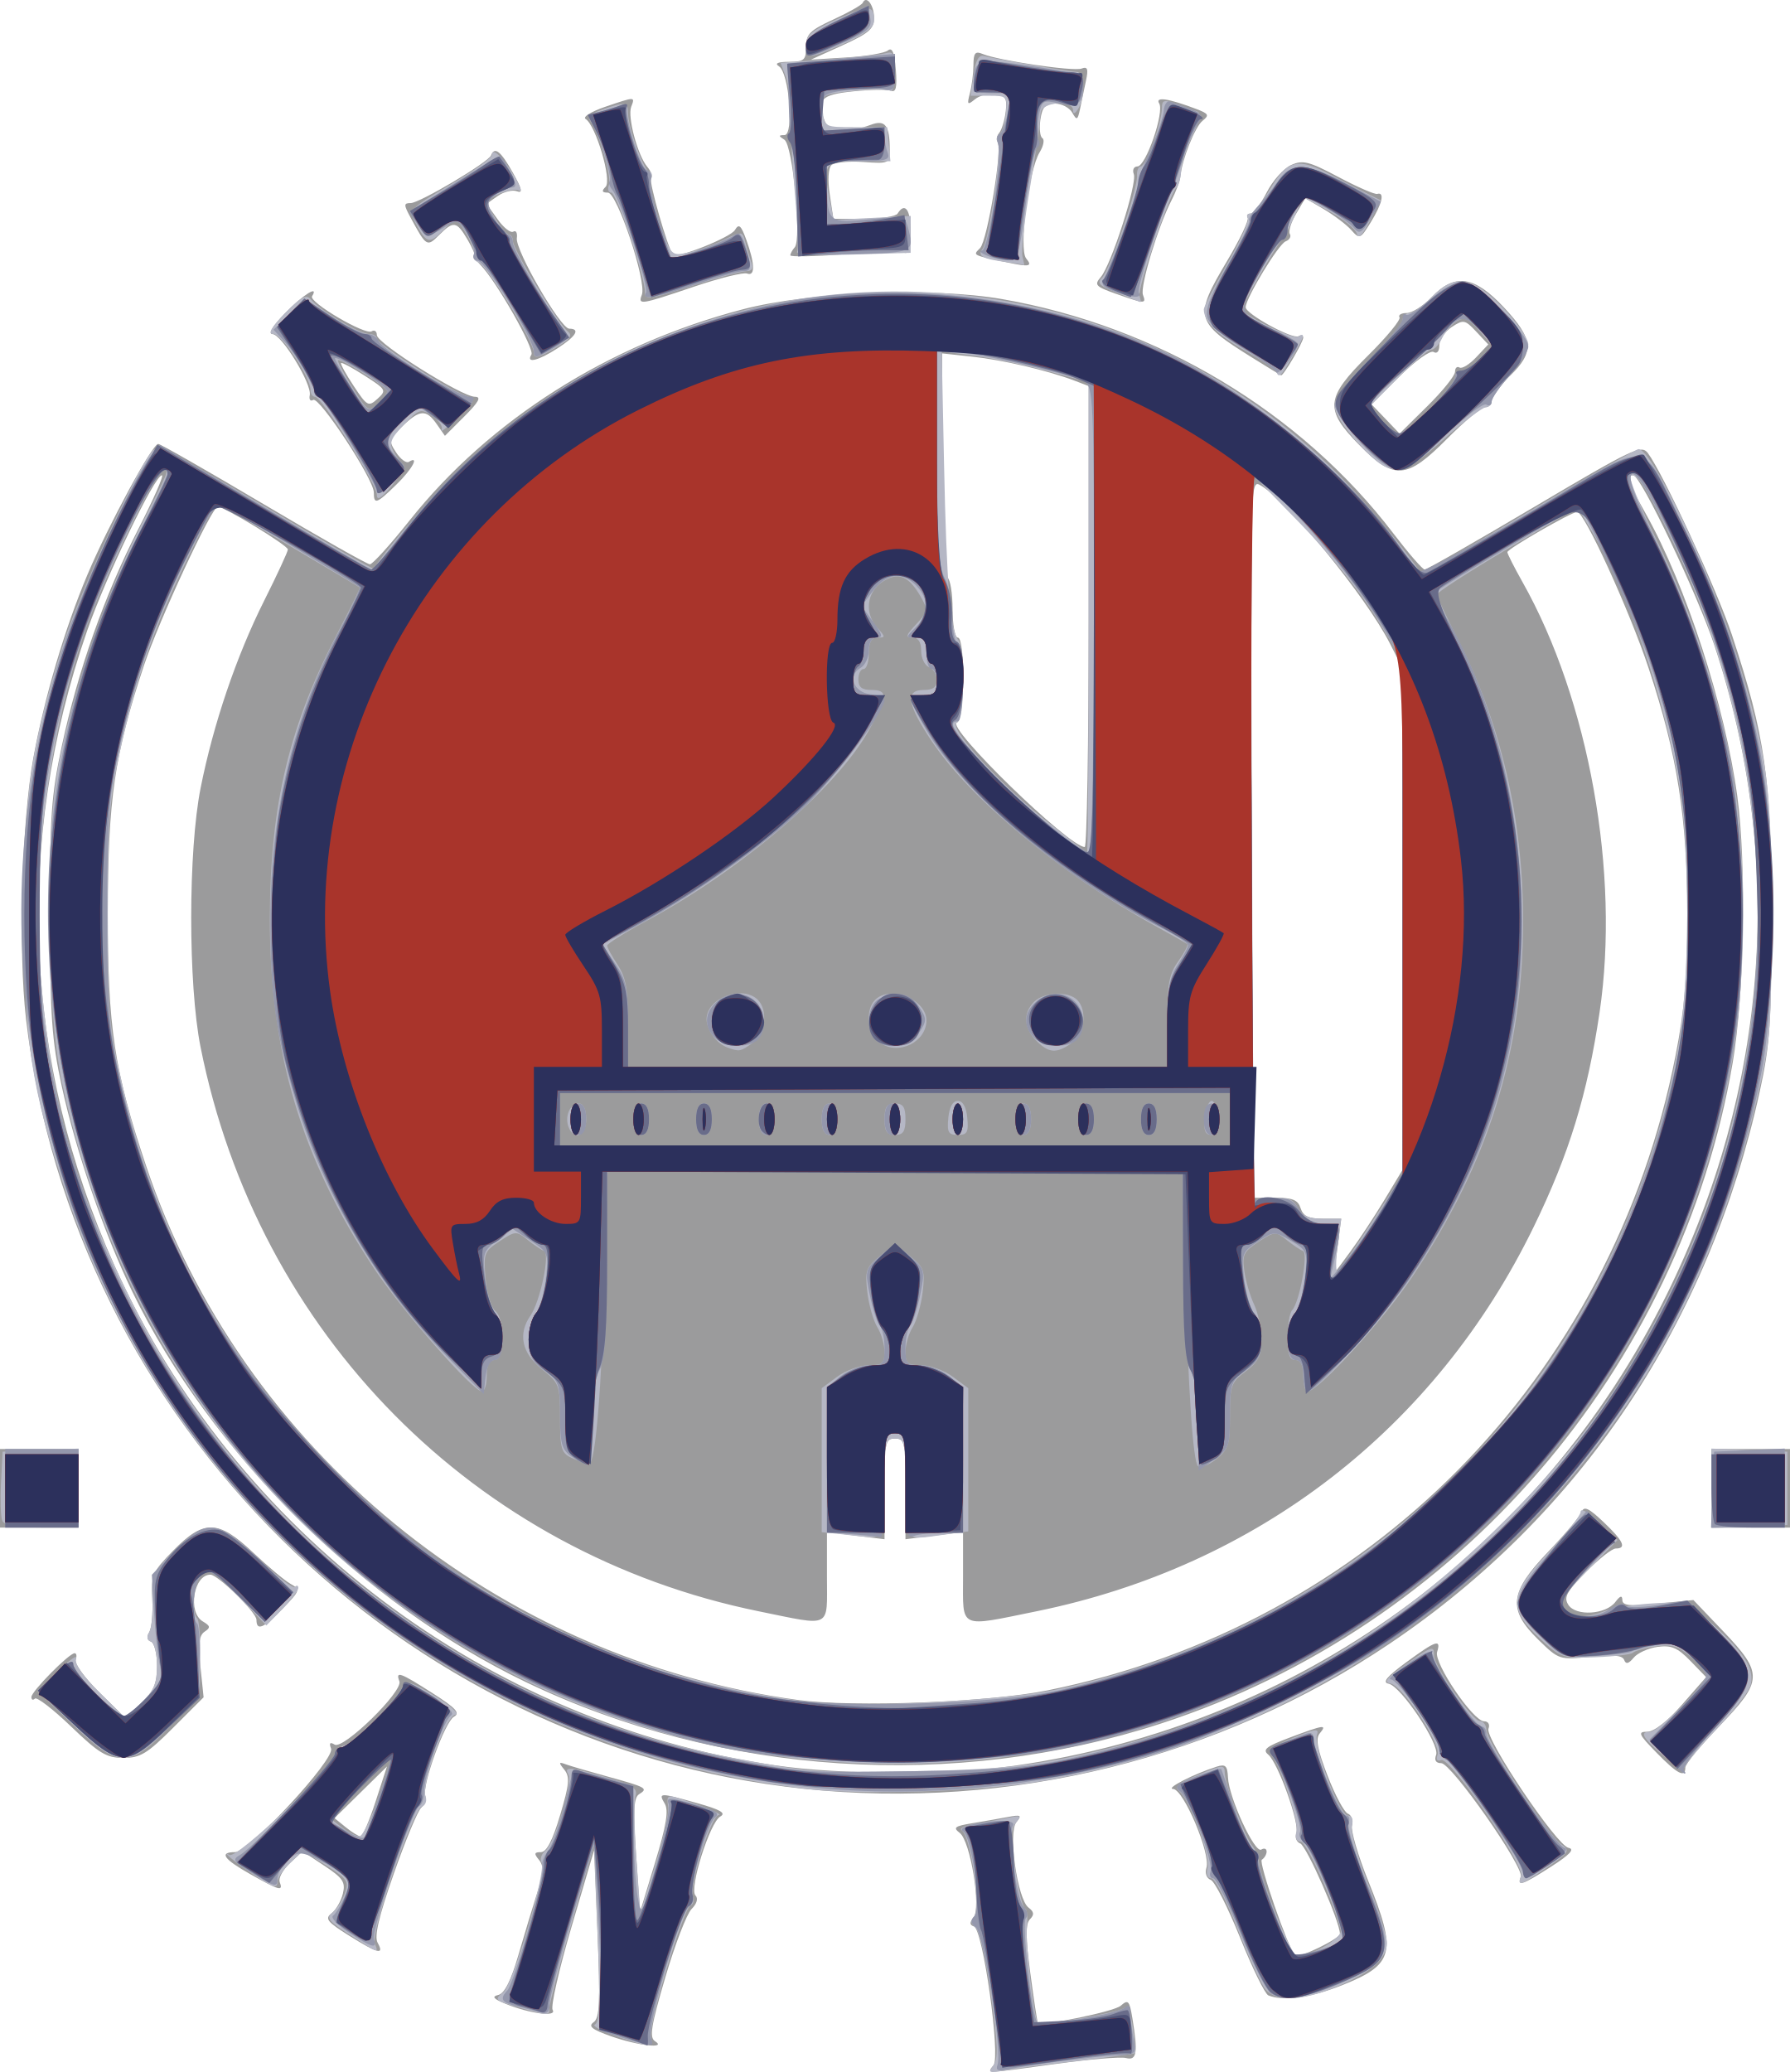 atlético san luis logo 1 1 - Atlético de San Luis Logo